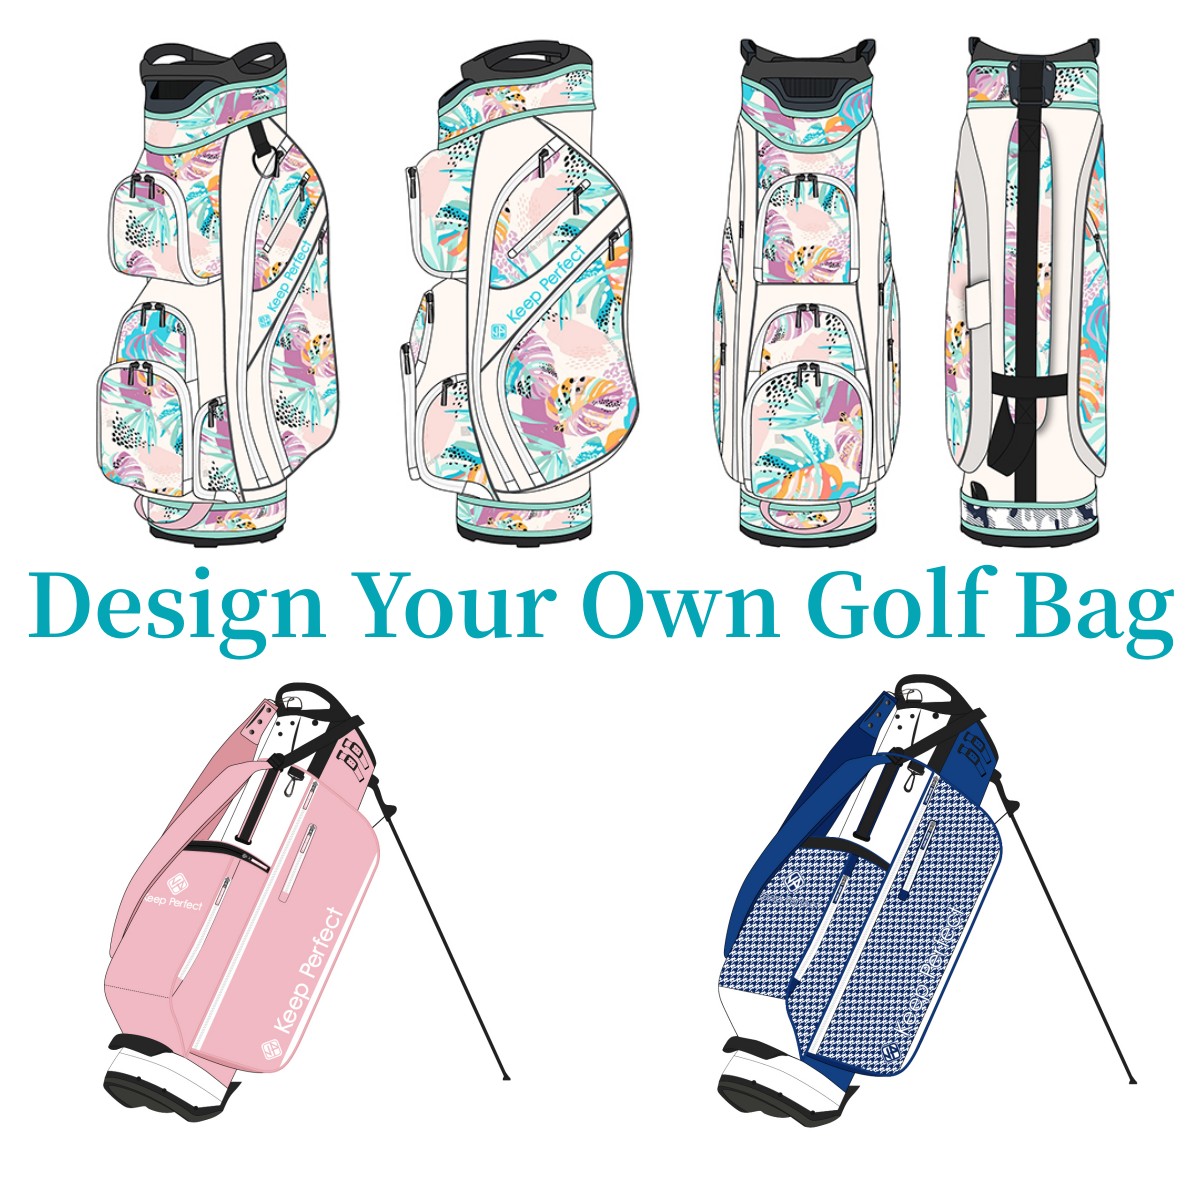 Design Your Own Golf Bag